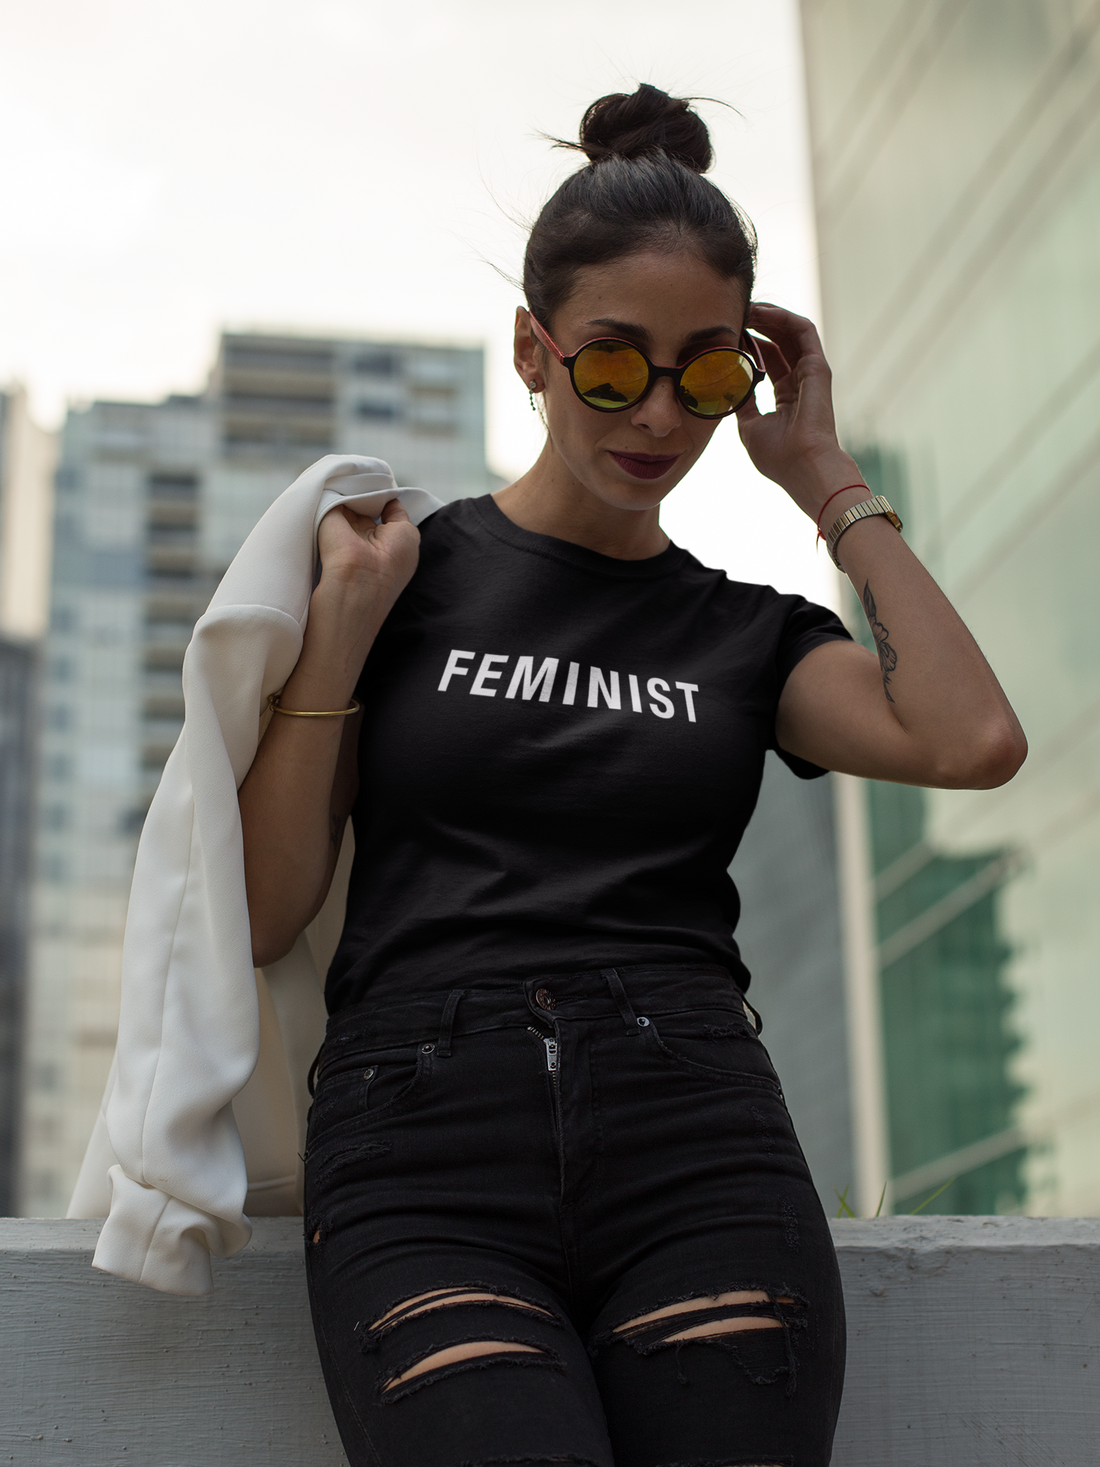  Feminist Shirts